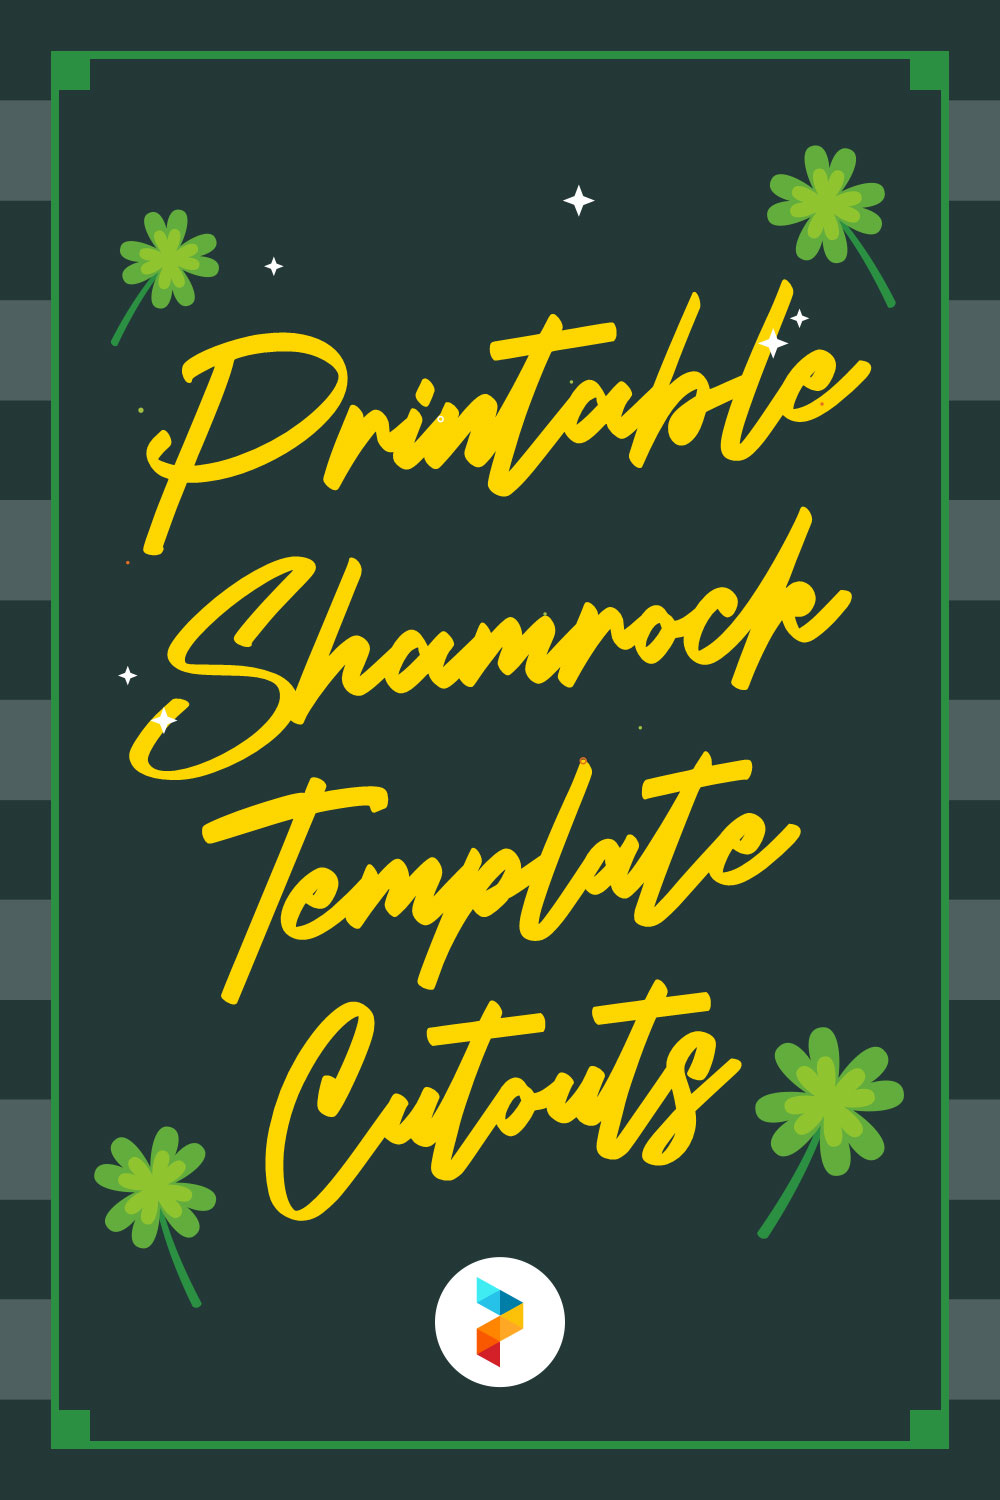 Printable Shamrock Template Cutouts